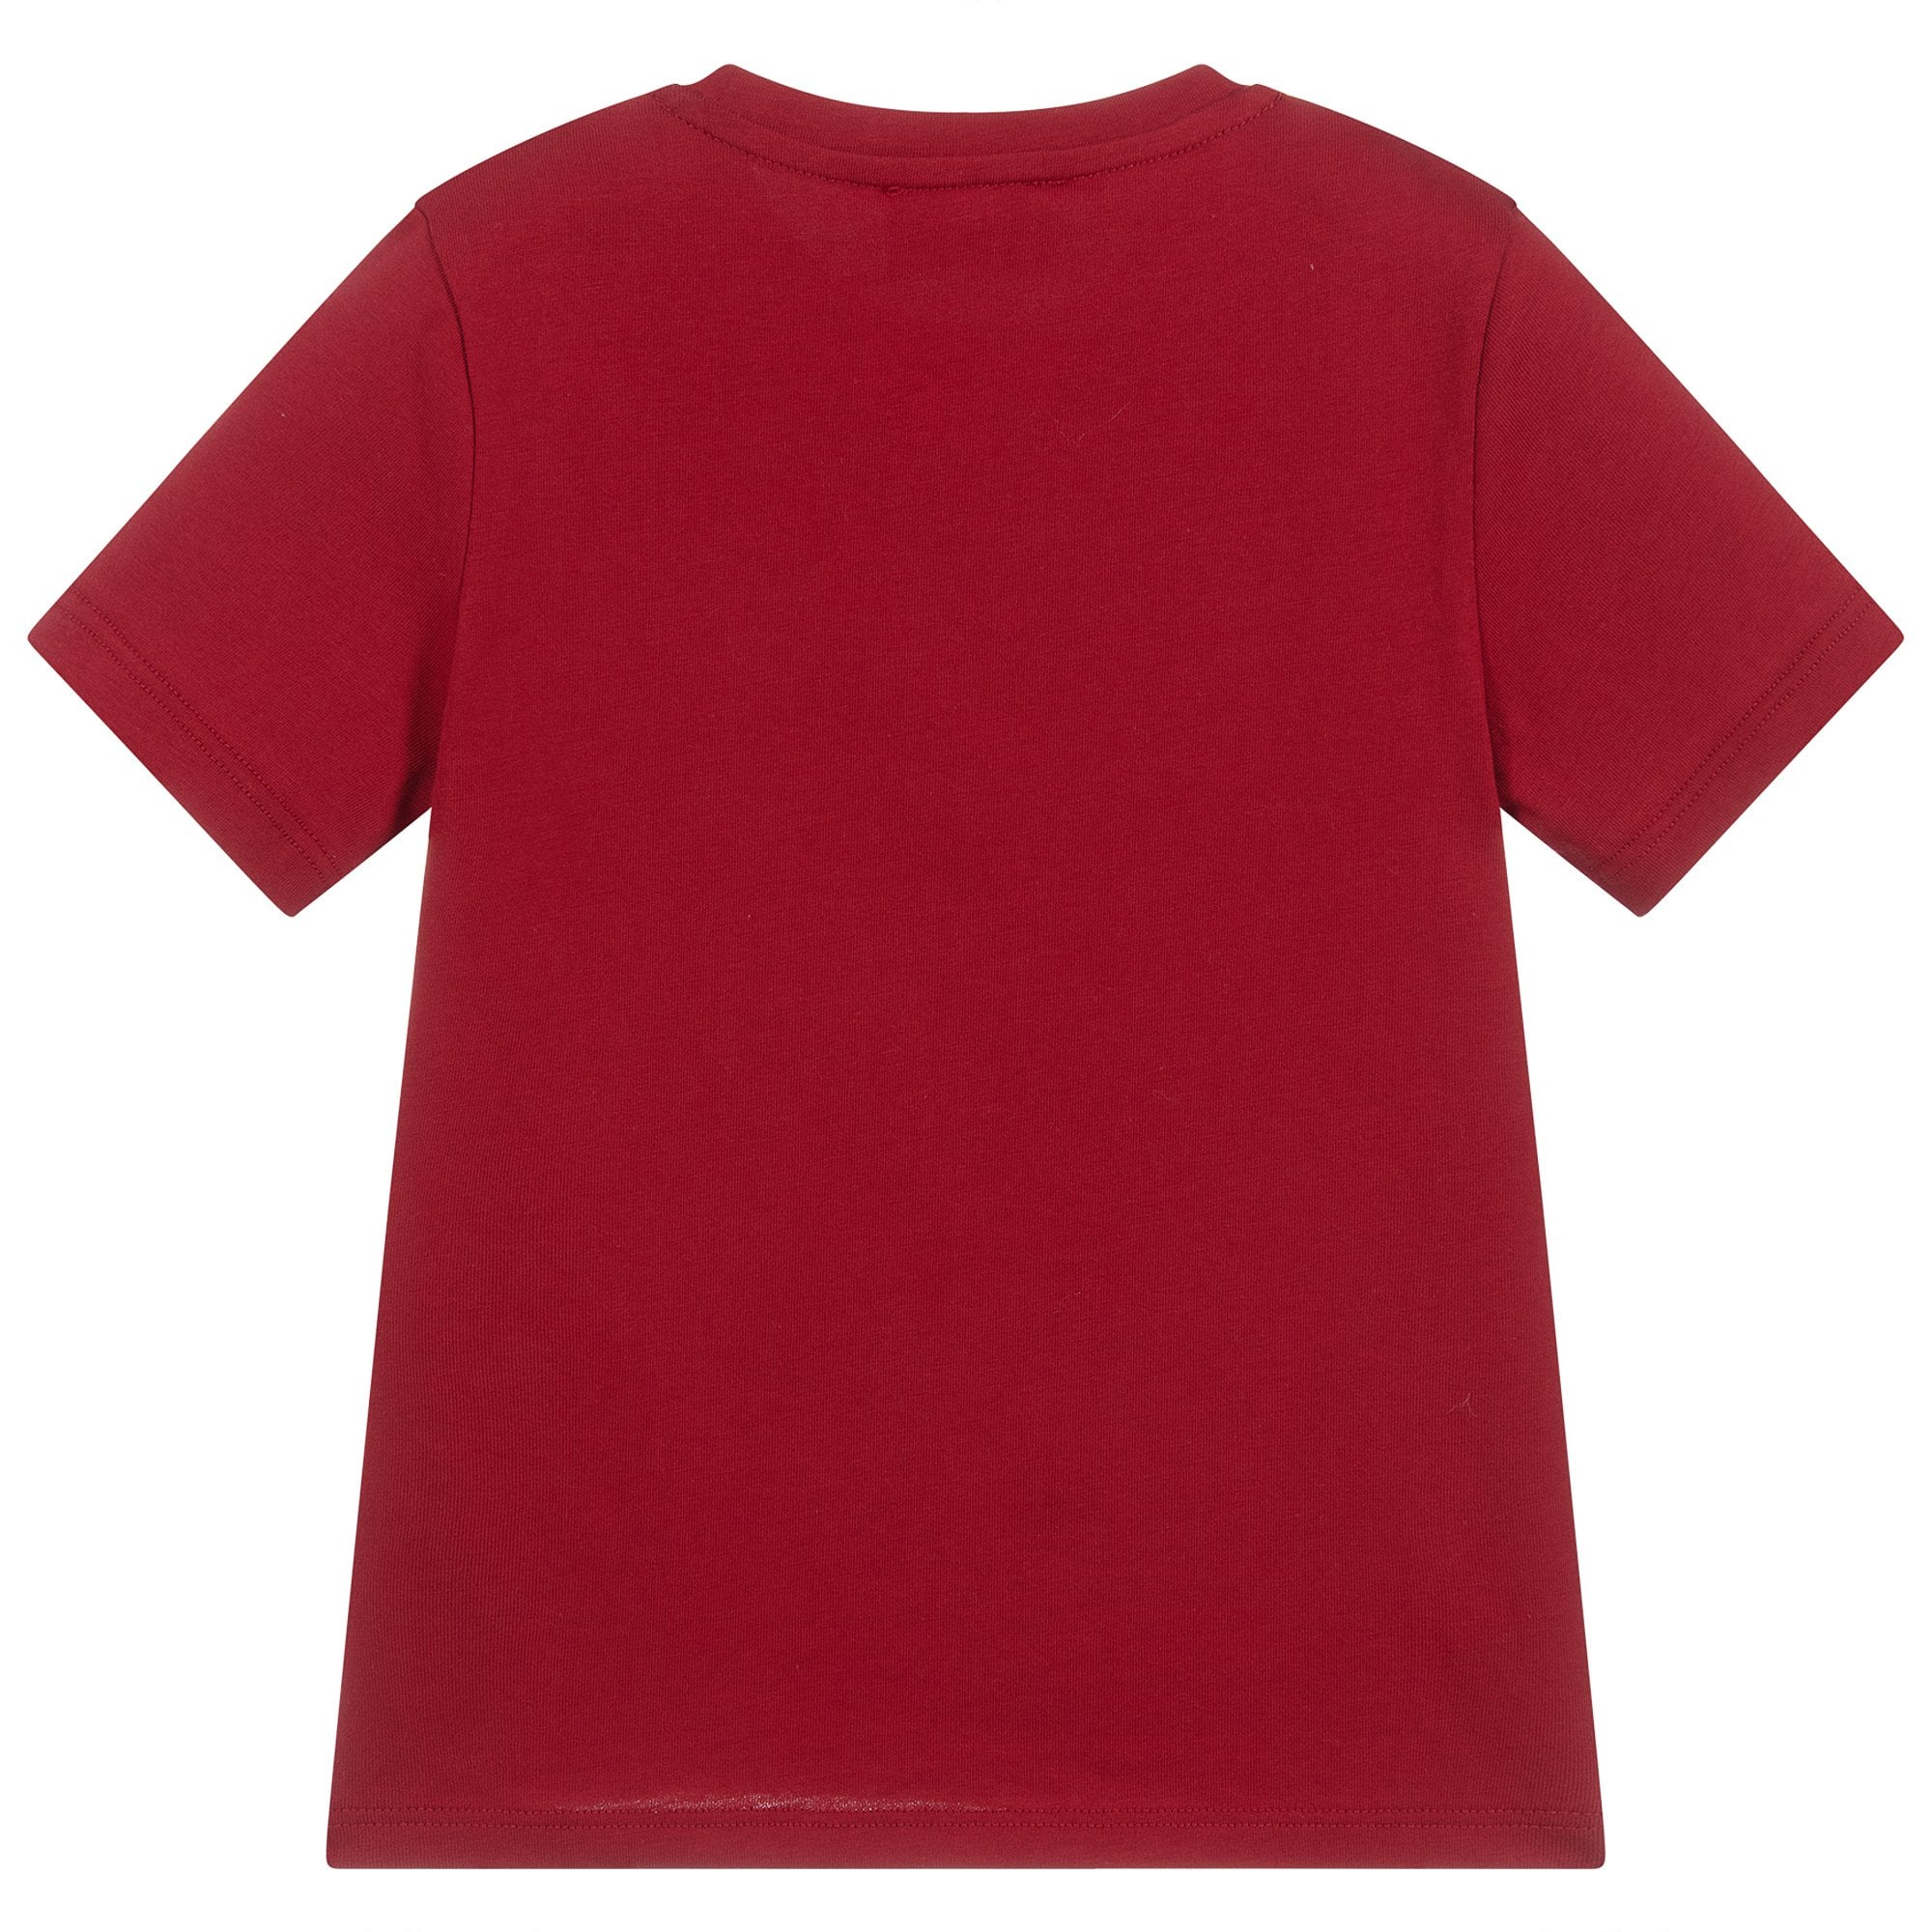 Young Versace Boys Medusa Logo Print T-Shirt Red